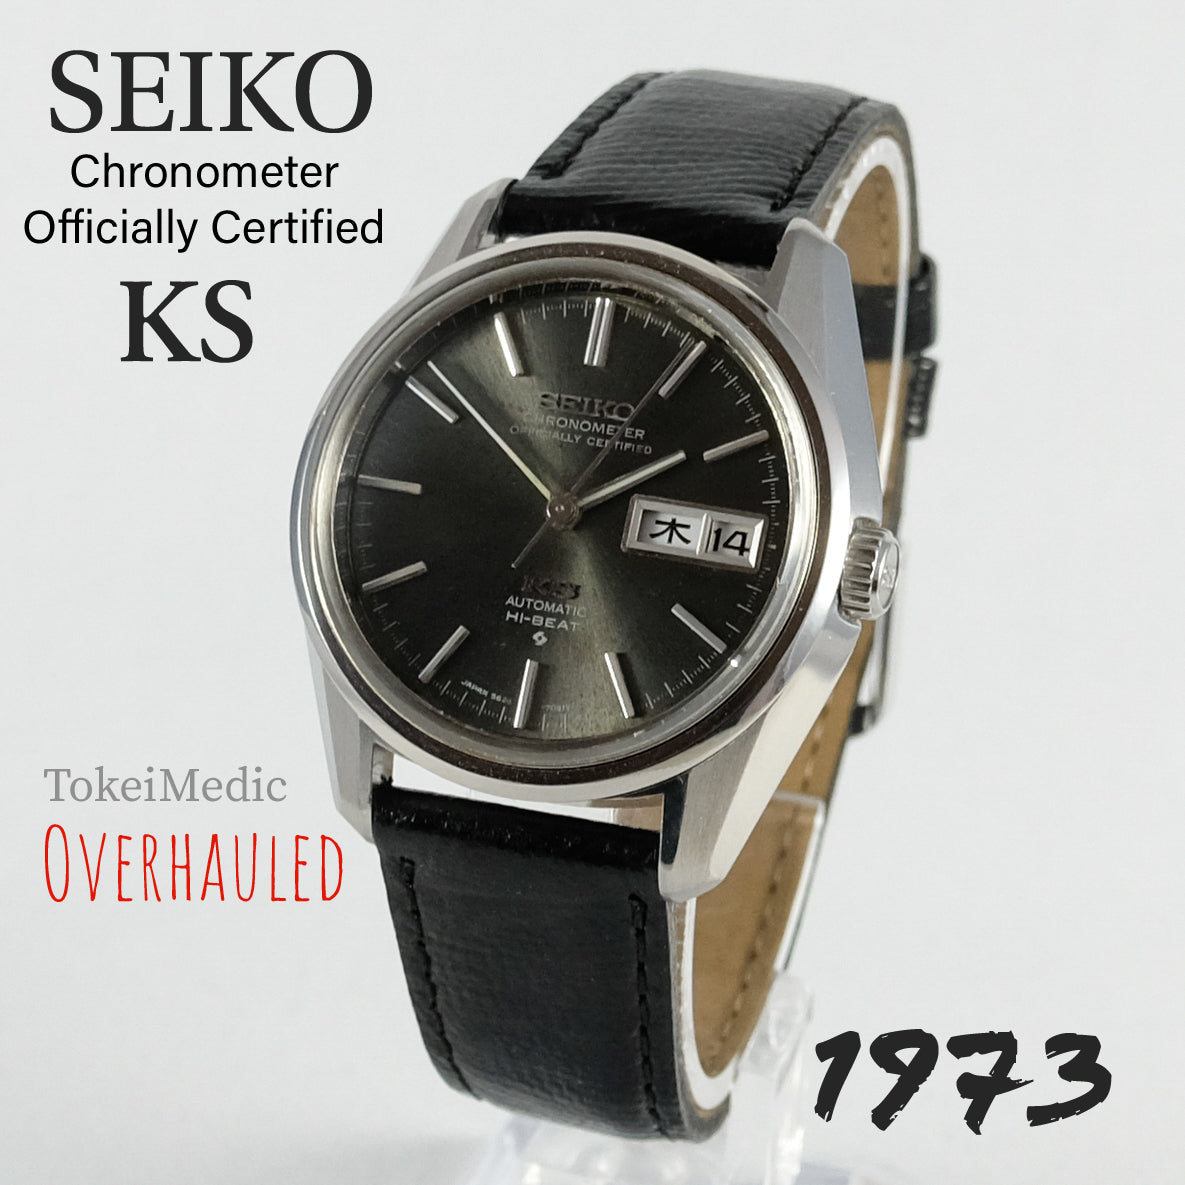 1973 Seiko KS Chronometer Officialy Certified 5626-7041